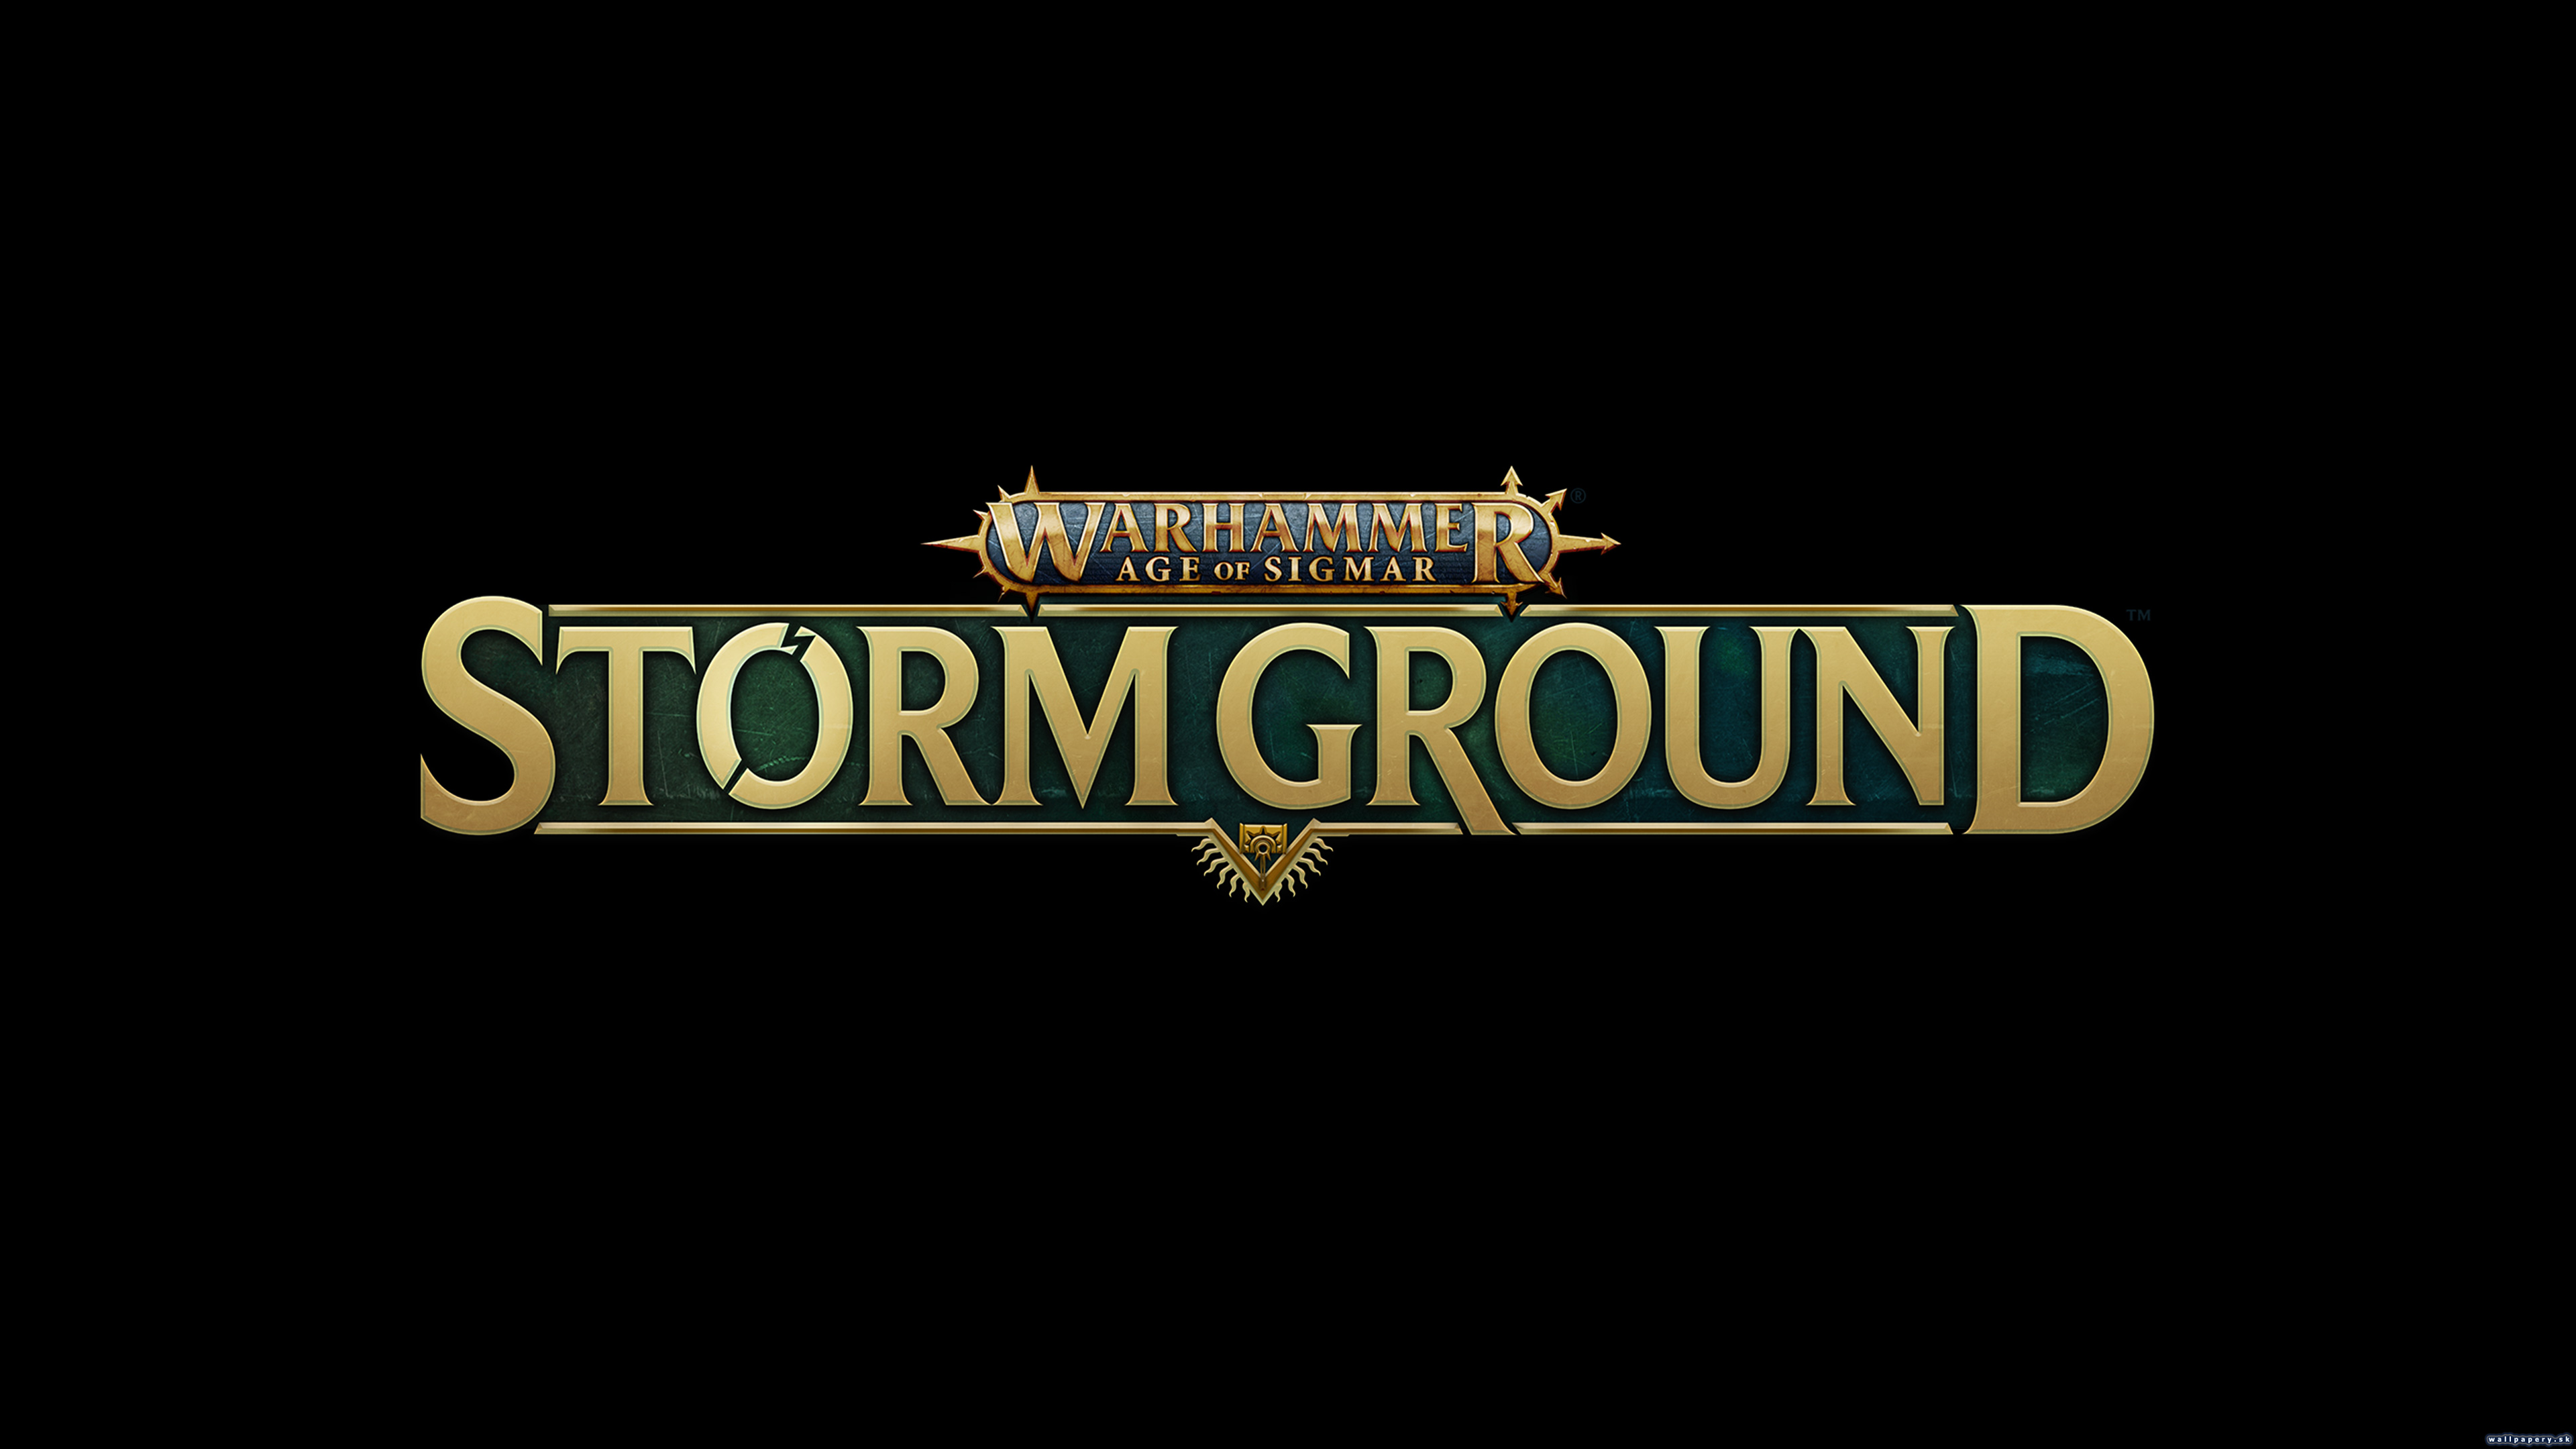 Warhammer Age of Sigmar: Storm Ground - wallpaper 2